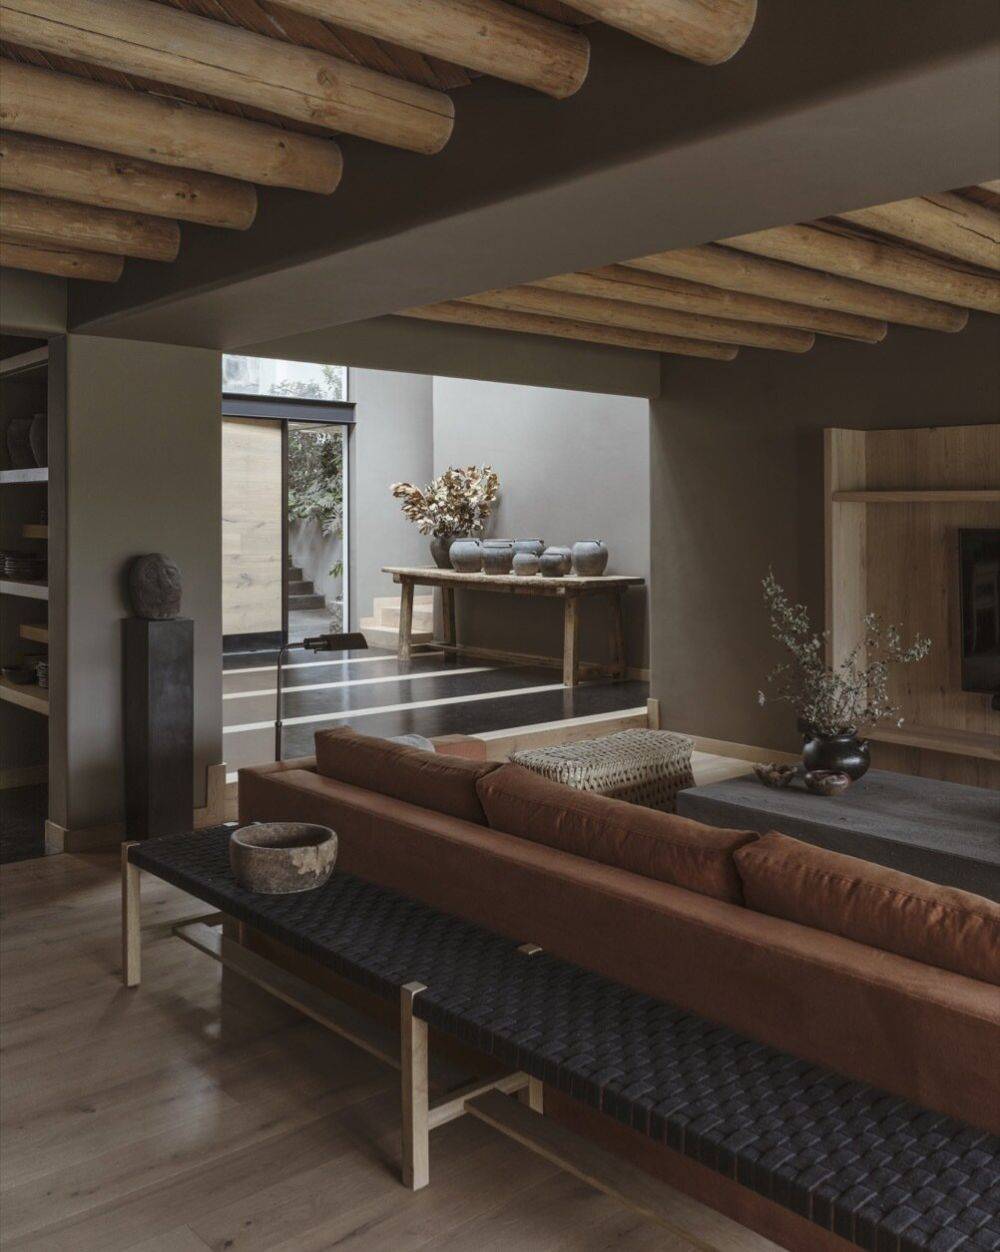 Architect: Mariana Morales. Furniture: Habitacion 116. Landscape Architects: PAAR Taller. Location: Valle de Bravo, Mexico. Photographer: Fabian Martinez